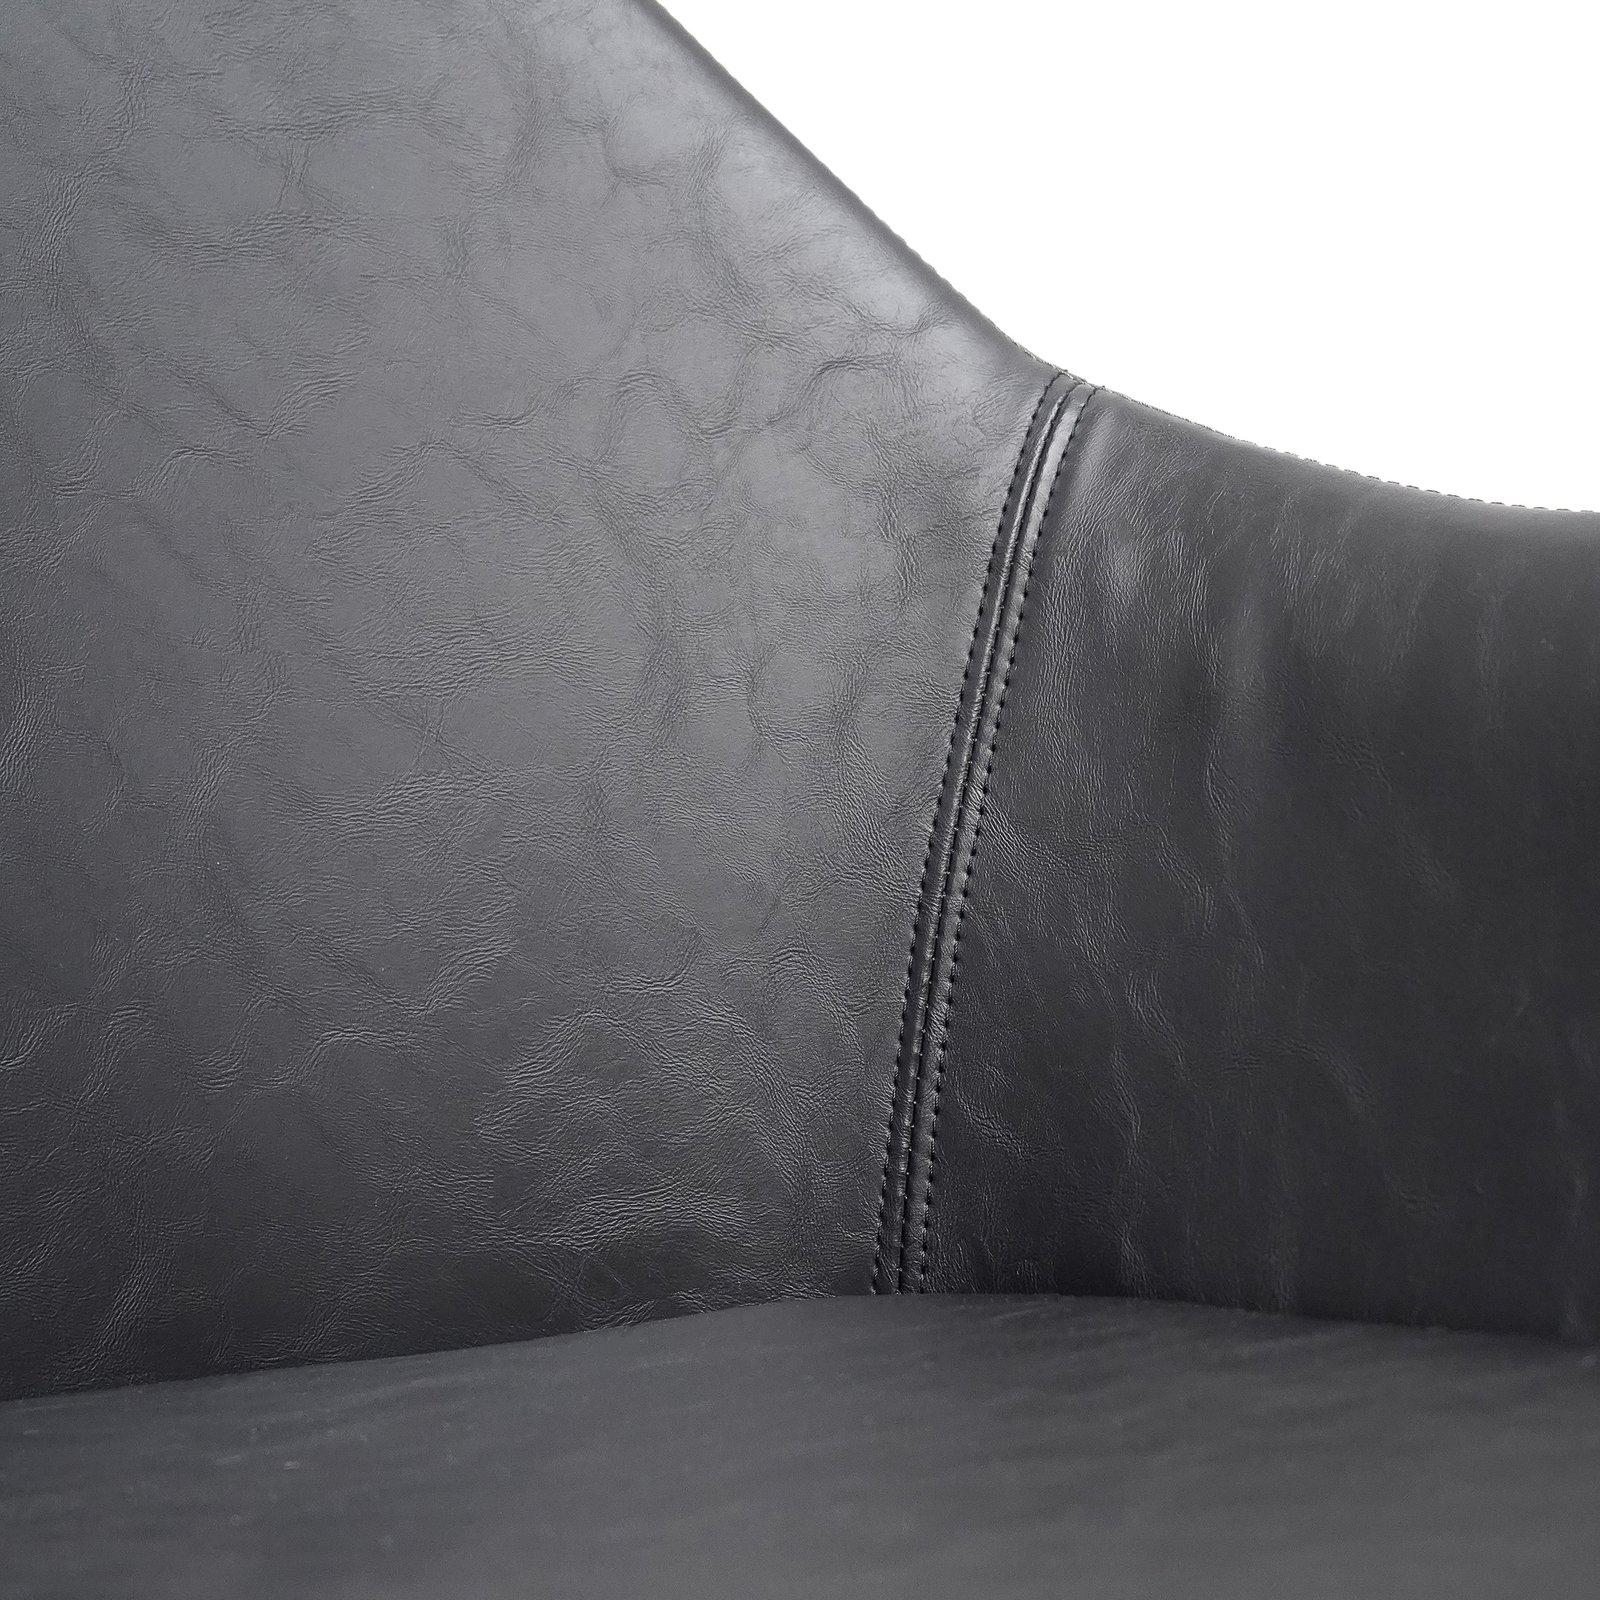 Pembroke | Black Leather, Grey Velvet Dining Chairs | Set Of 2 | Black